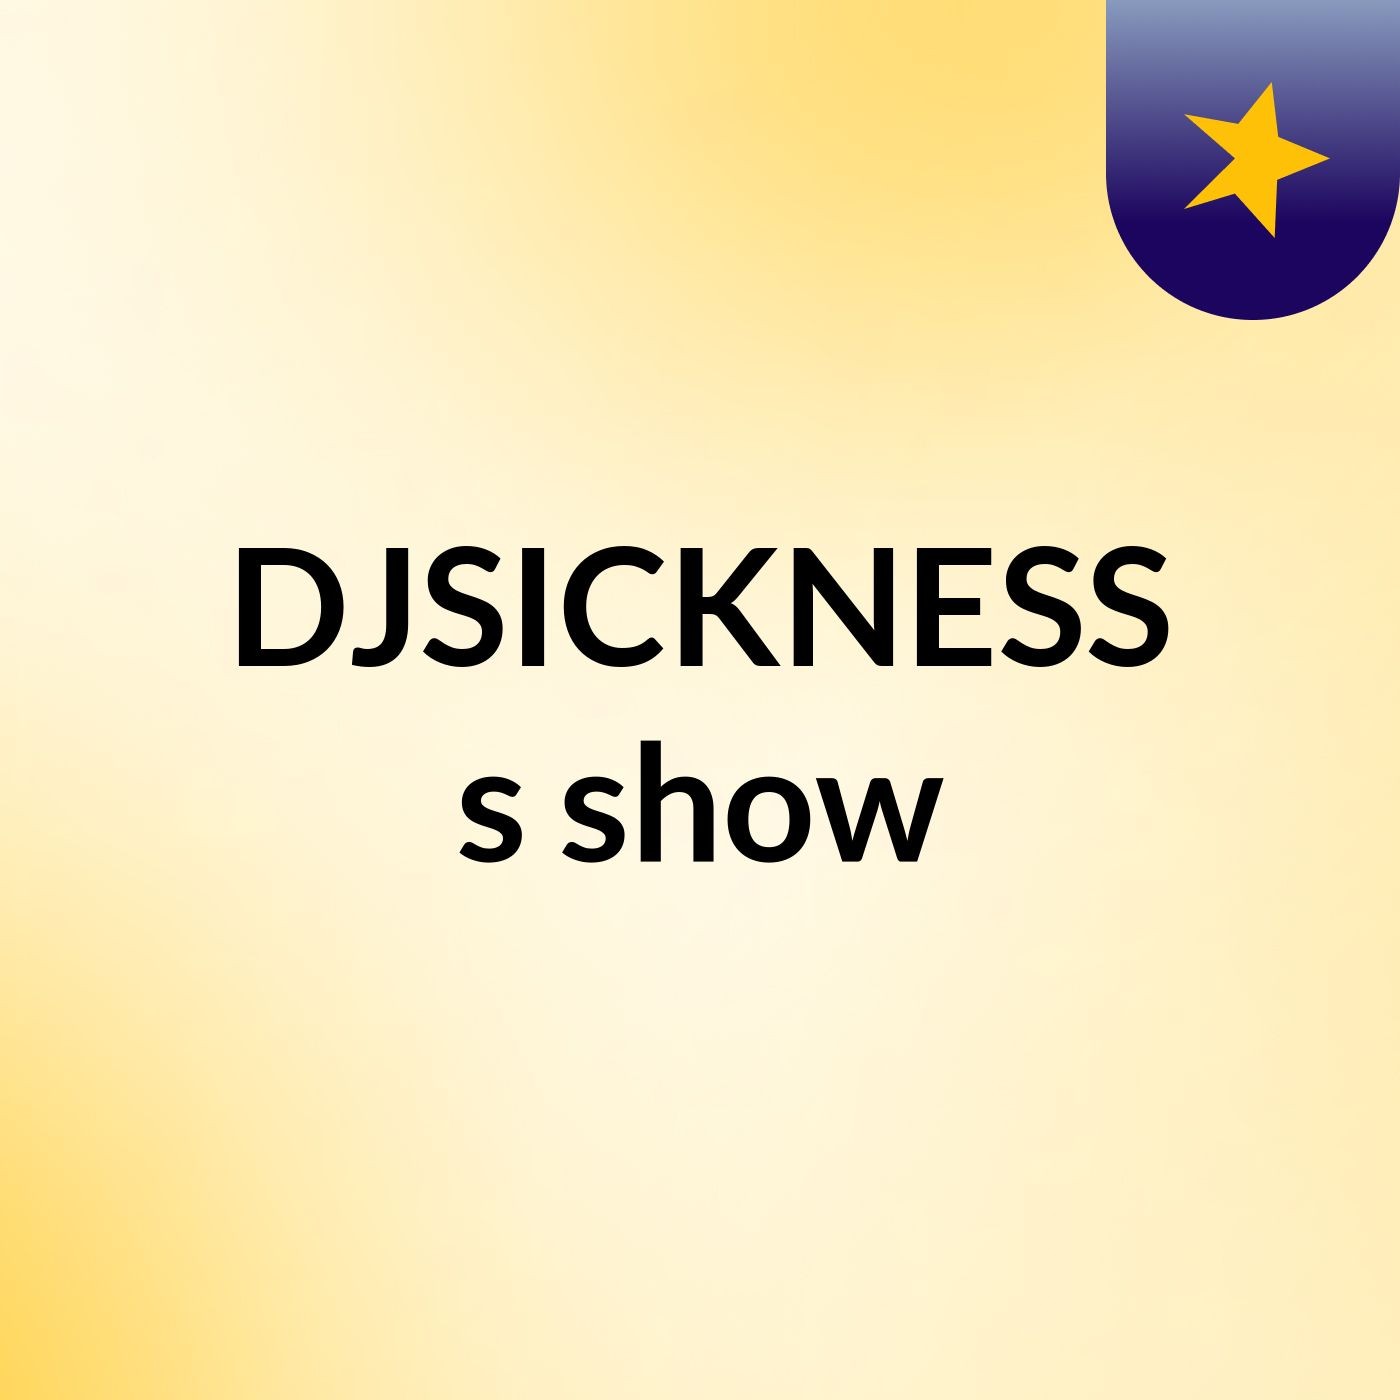 DJSICKNESS's show